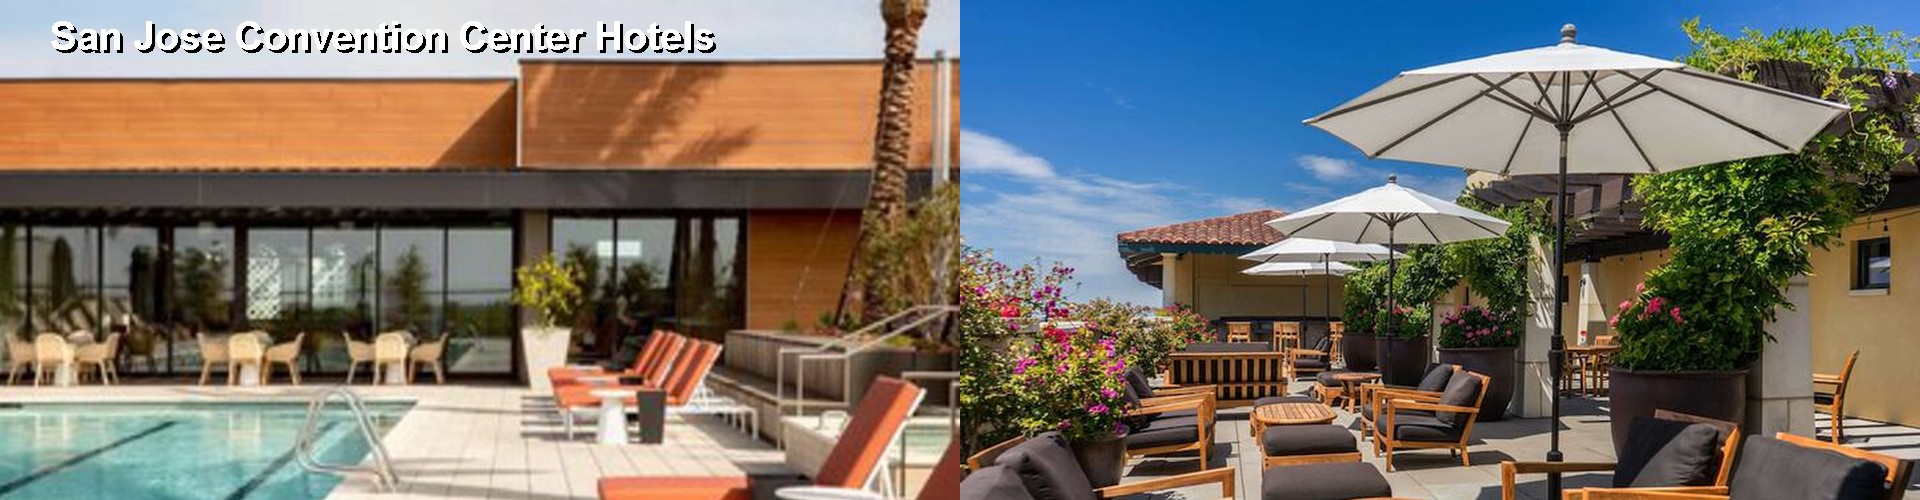 4 Best Hotels near San Jose Convention Center